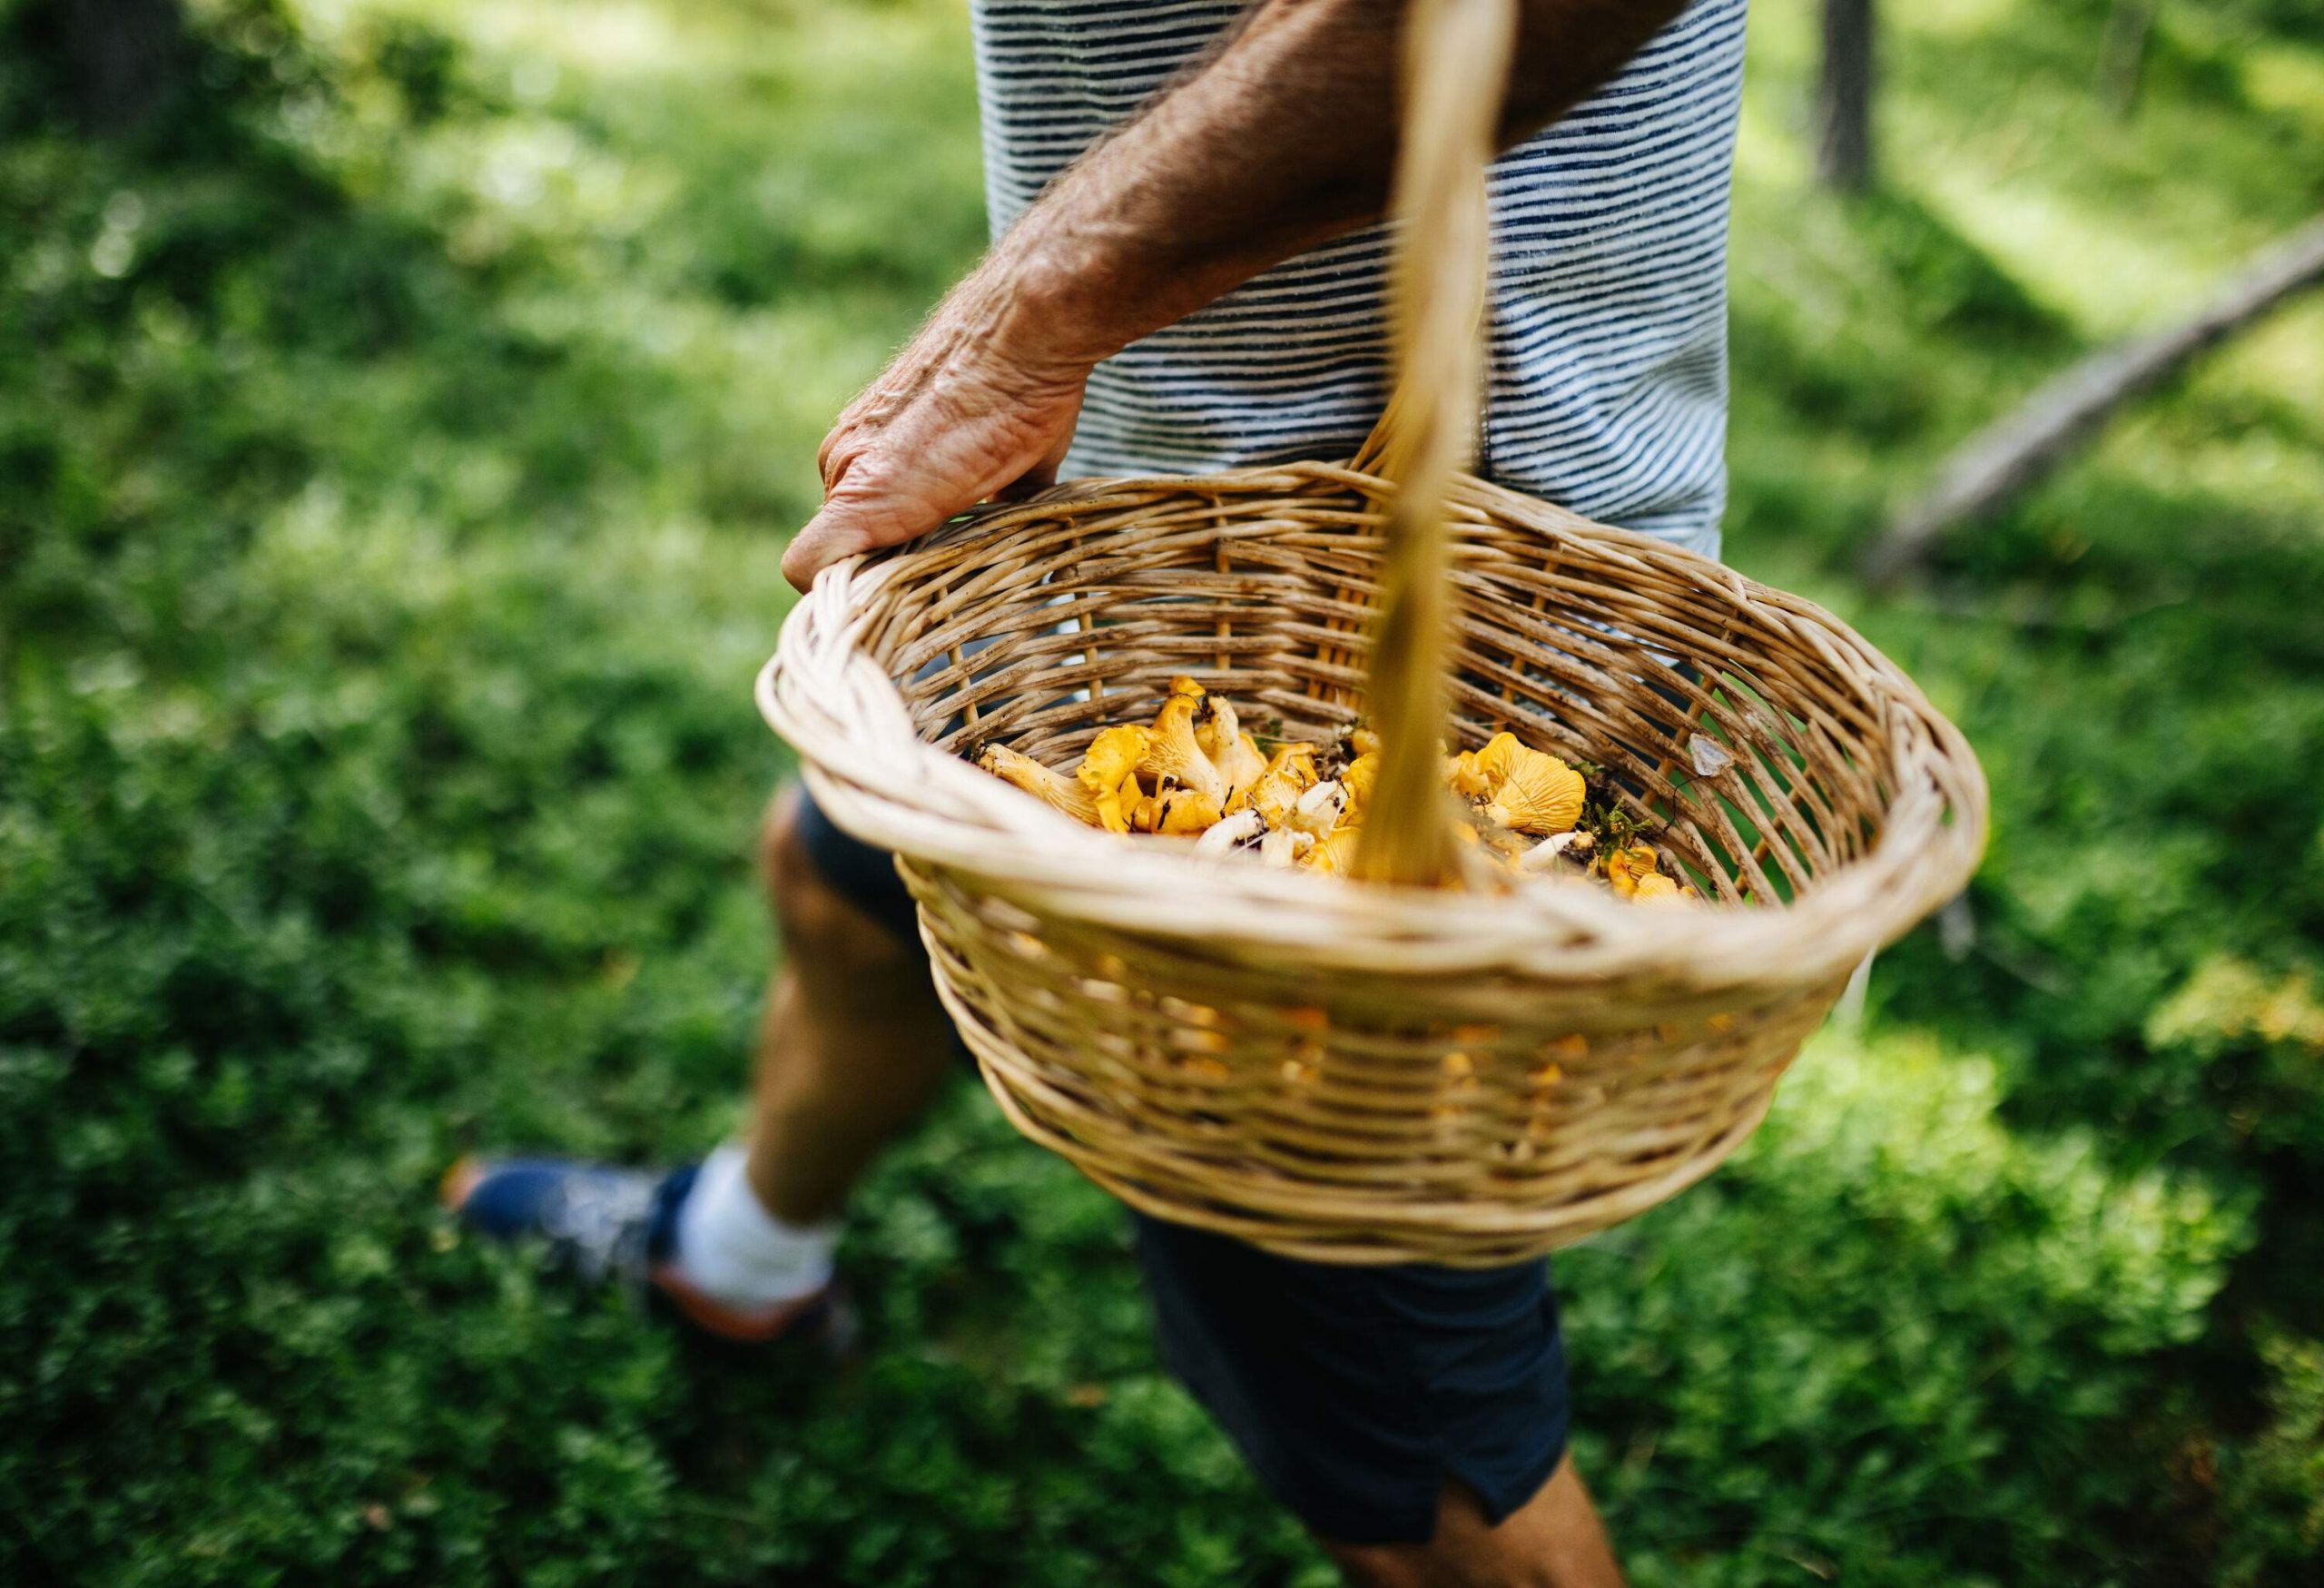 An elderly person holding a straw basket half-full of mushrooms.